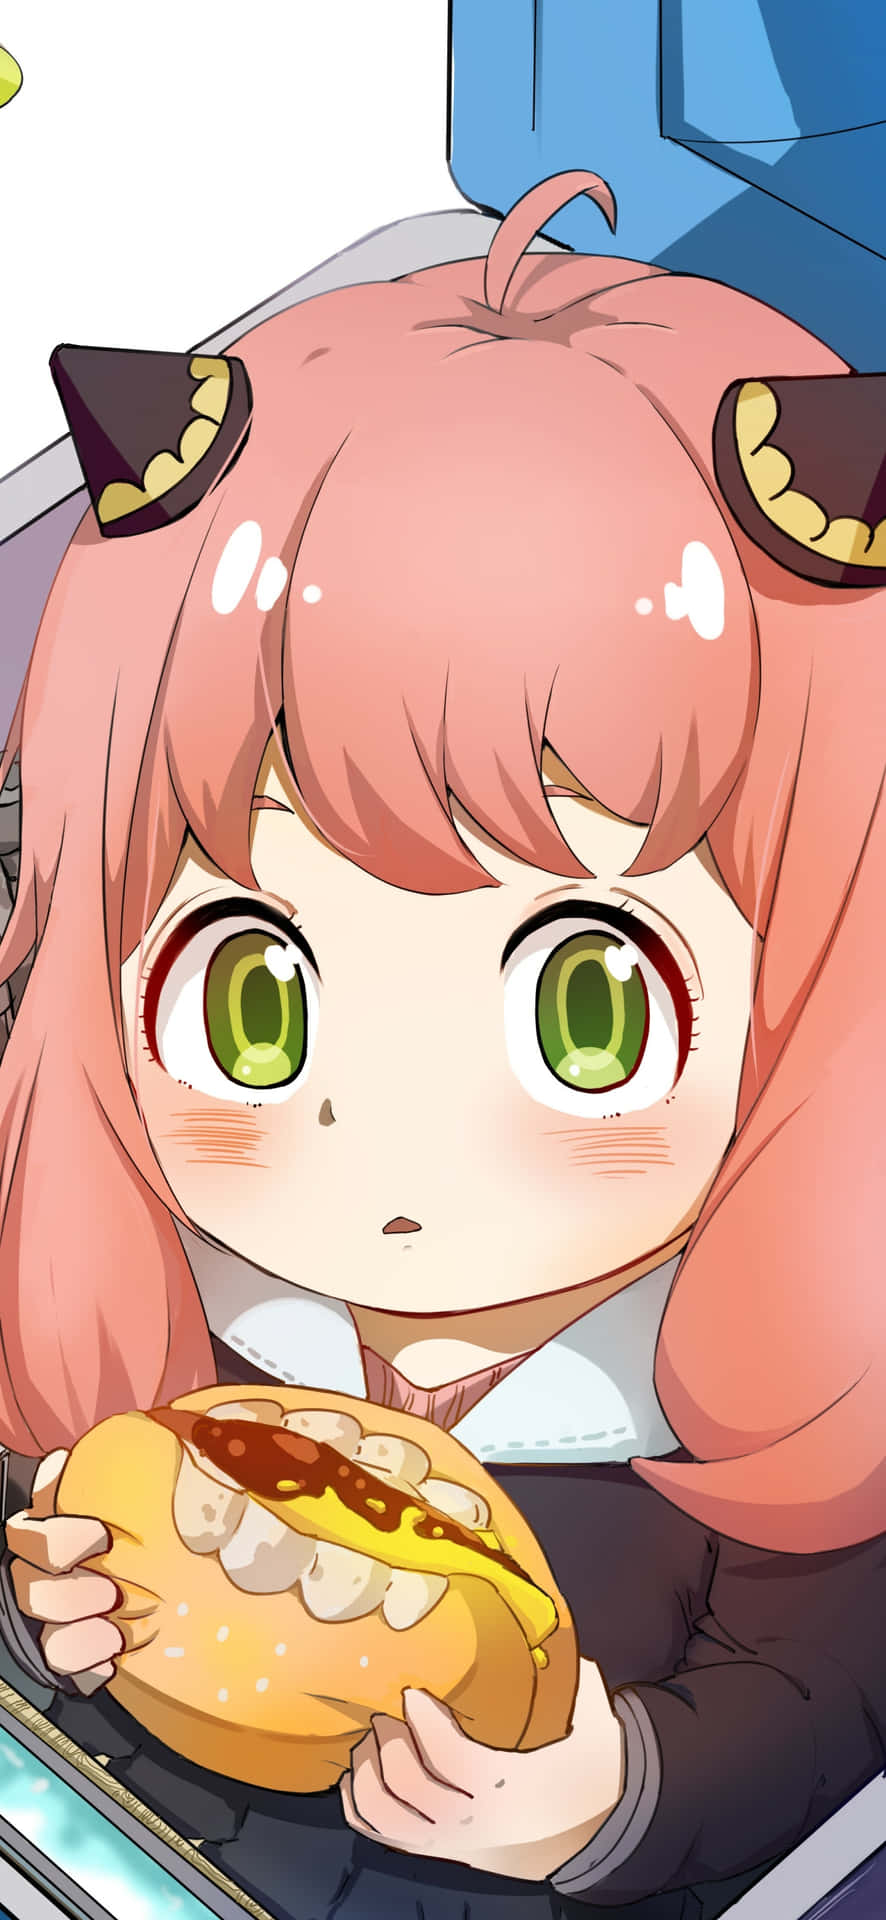 Anime Character Eating Burger Wallpaper